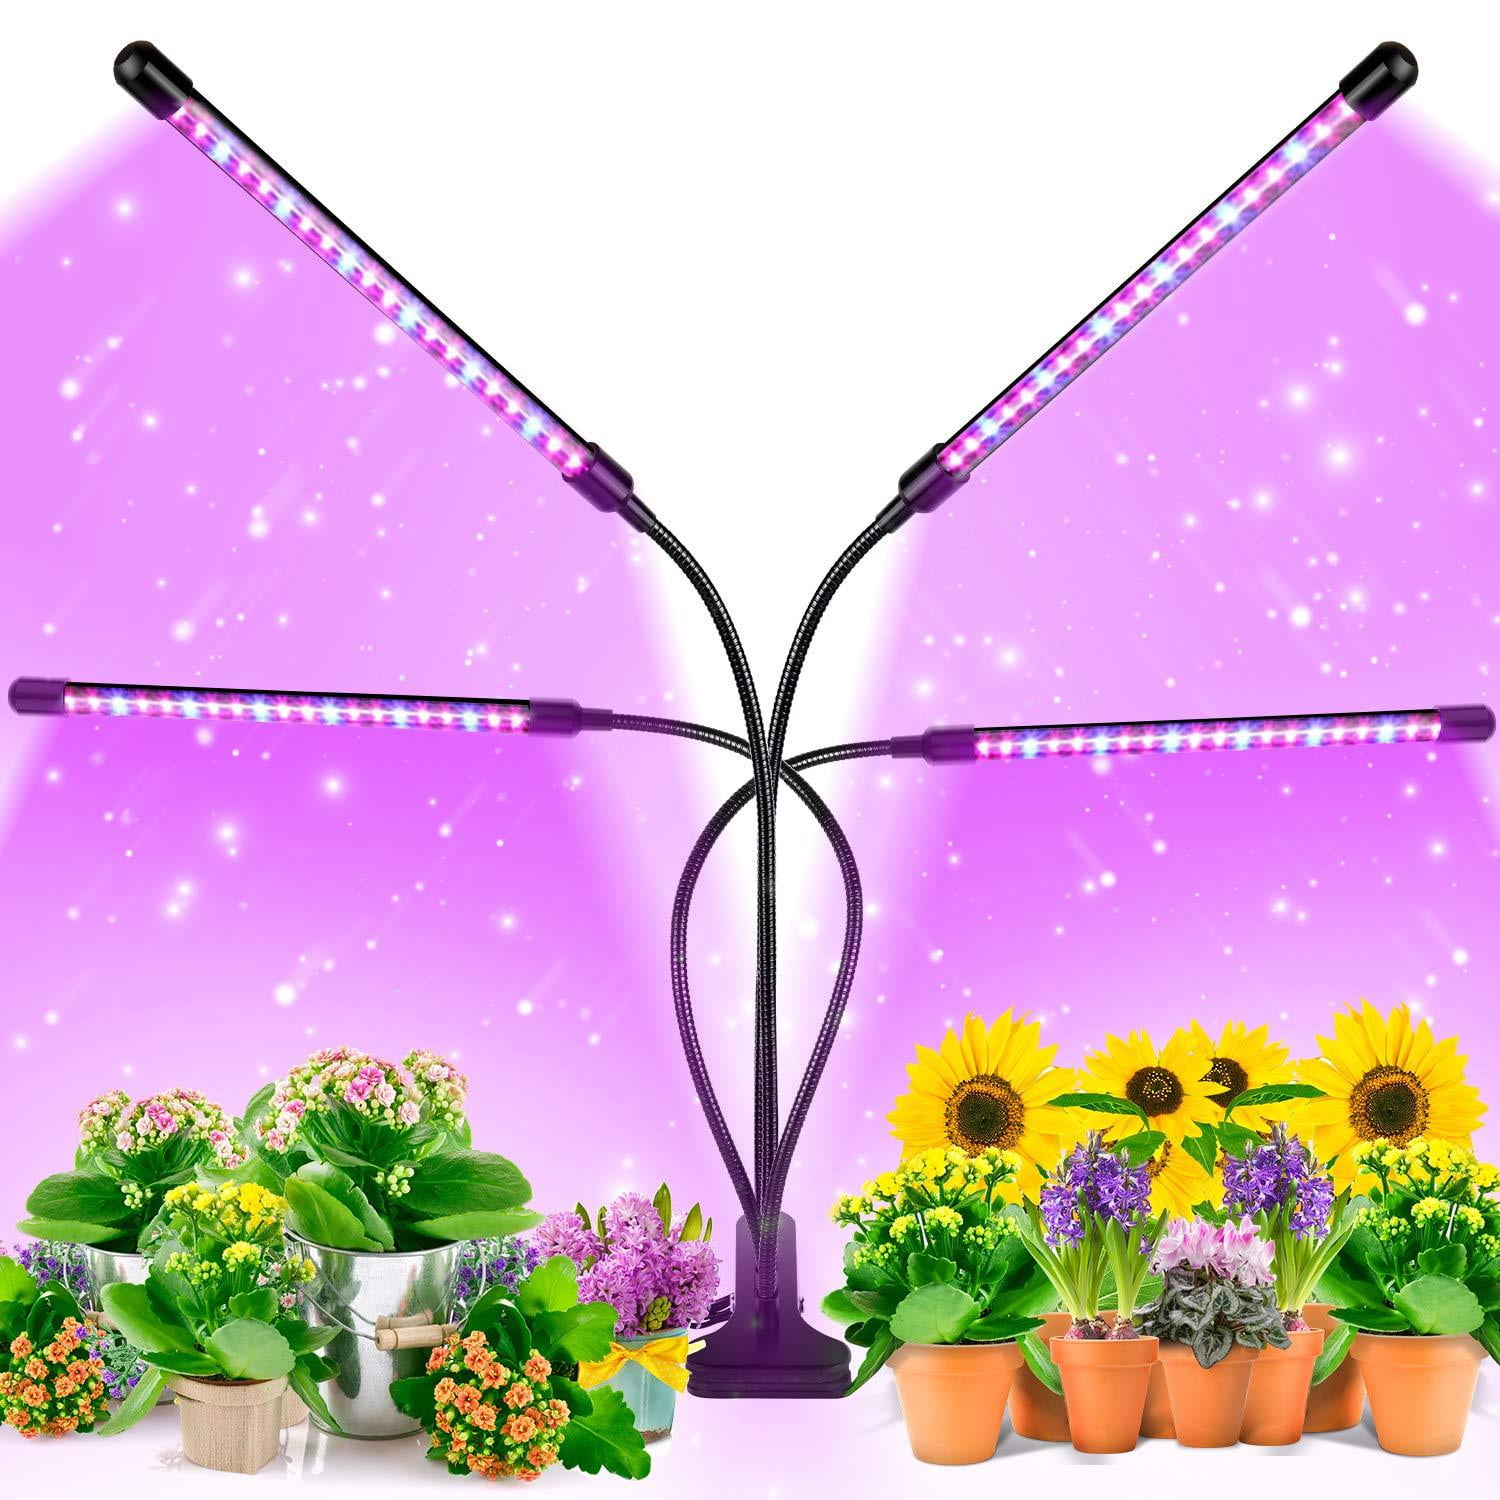 4 Heads LED Grow Light Plant Growing Lamp Lights Indoor Plants Hydroponics 80W 